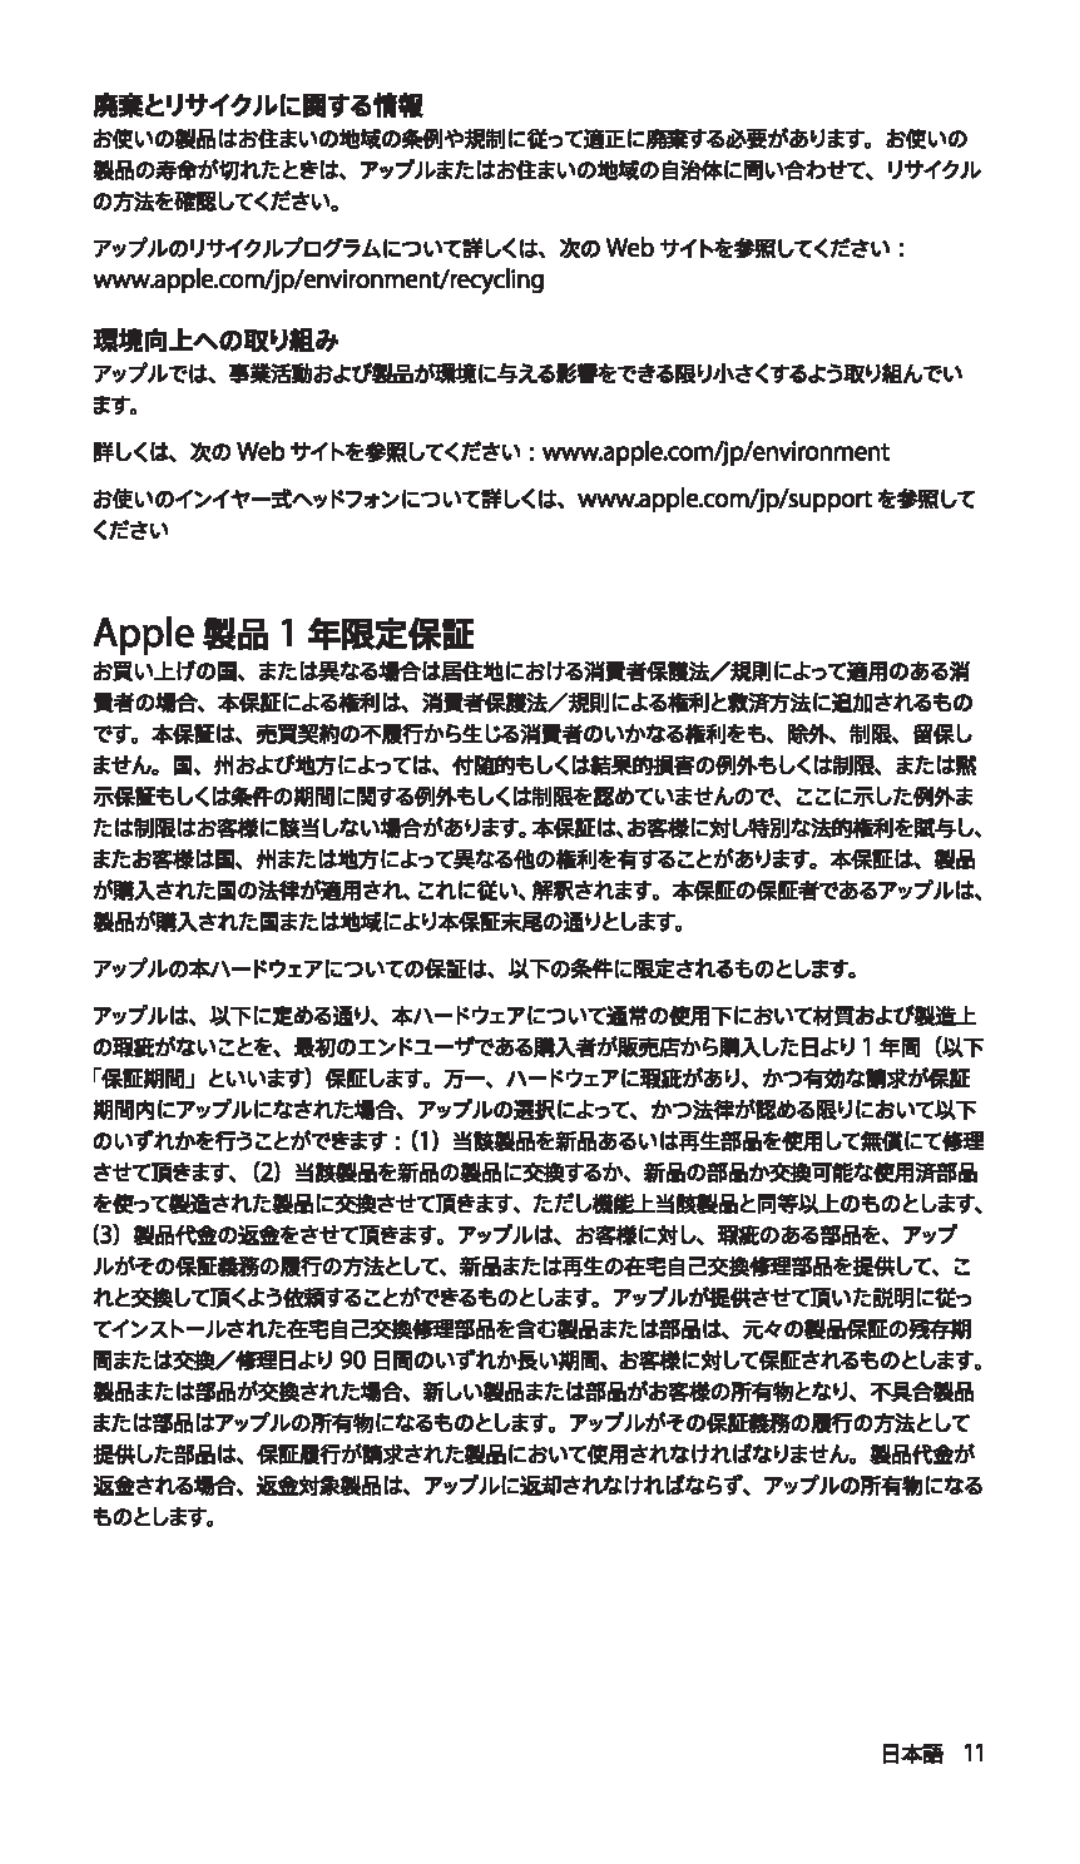 Apple ZM034-4942-A manual 